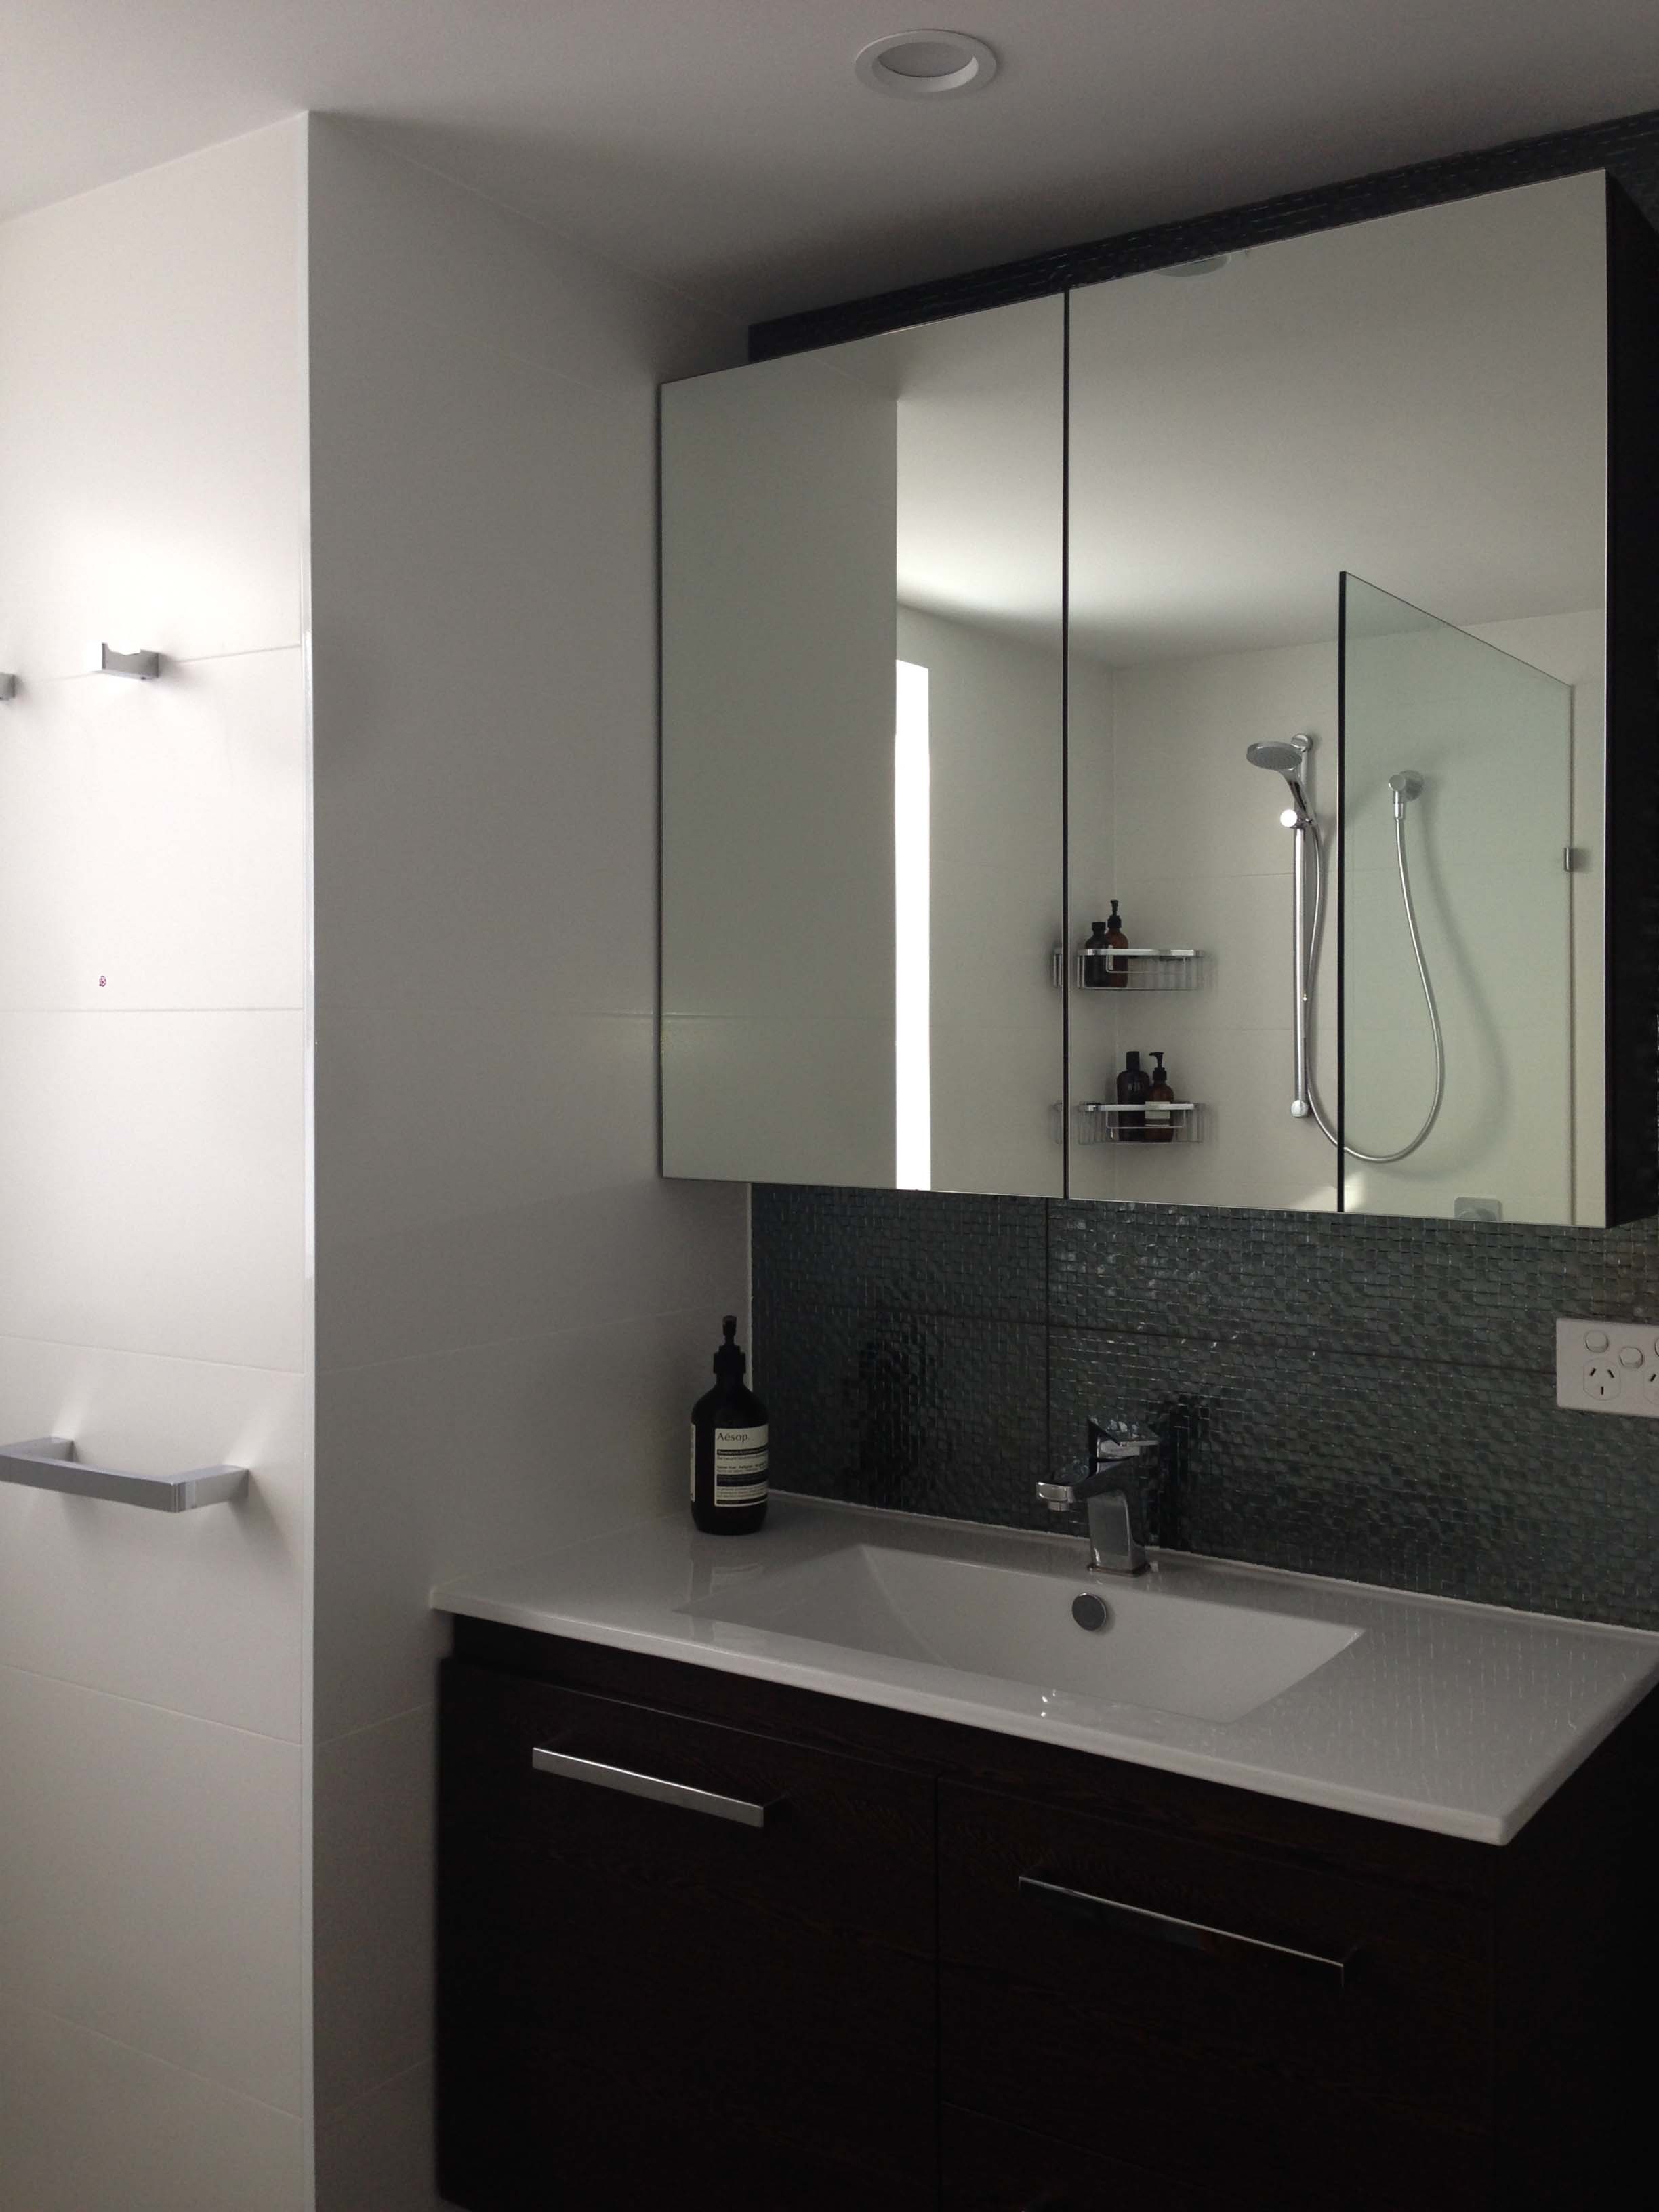 Wooloowin Vanity Mirror Cabinet Mosaic Feature Tile Brisbane Bathroom Renovations